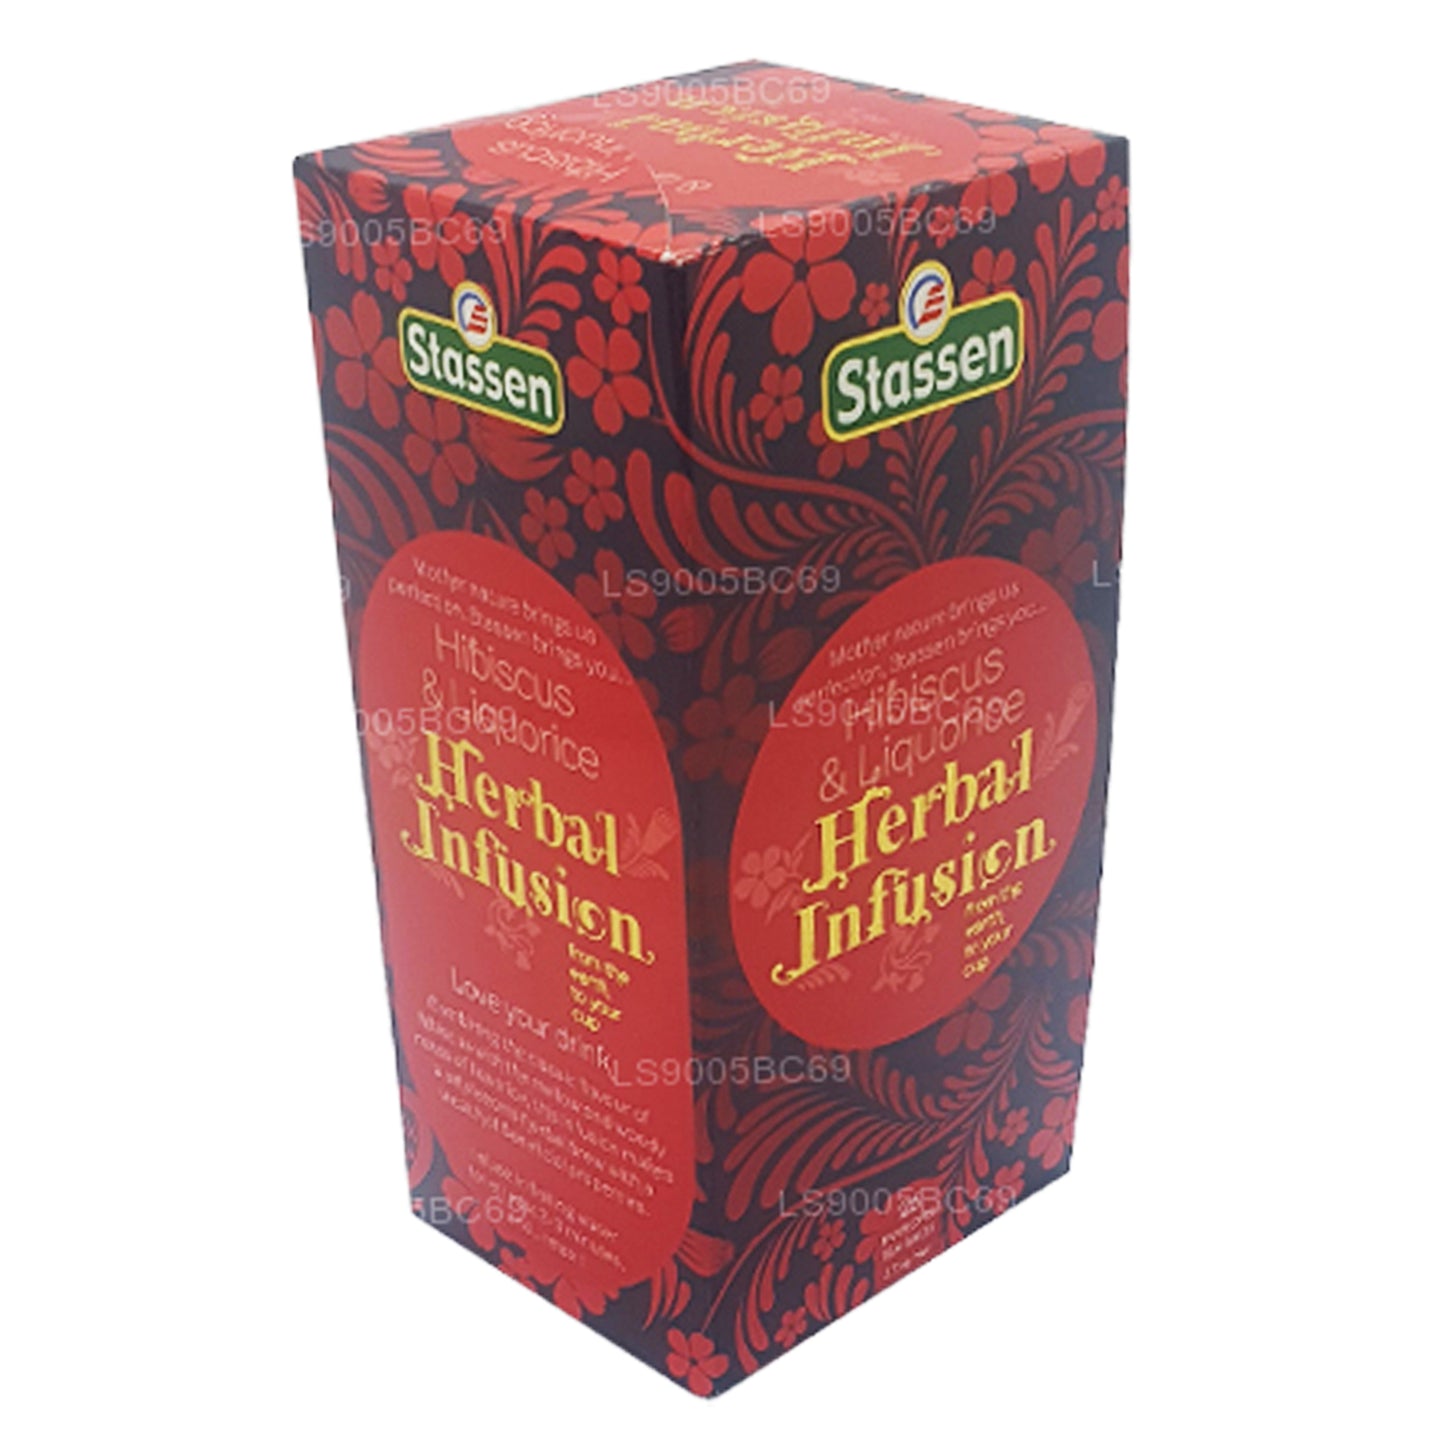 Stassen Hibiscus and Liquorice Herbal Infusion Tea (37.5g) 25 Tea Bags